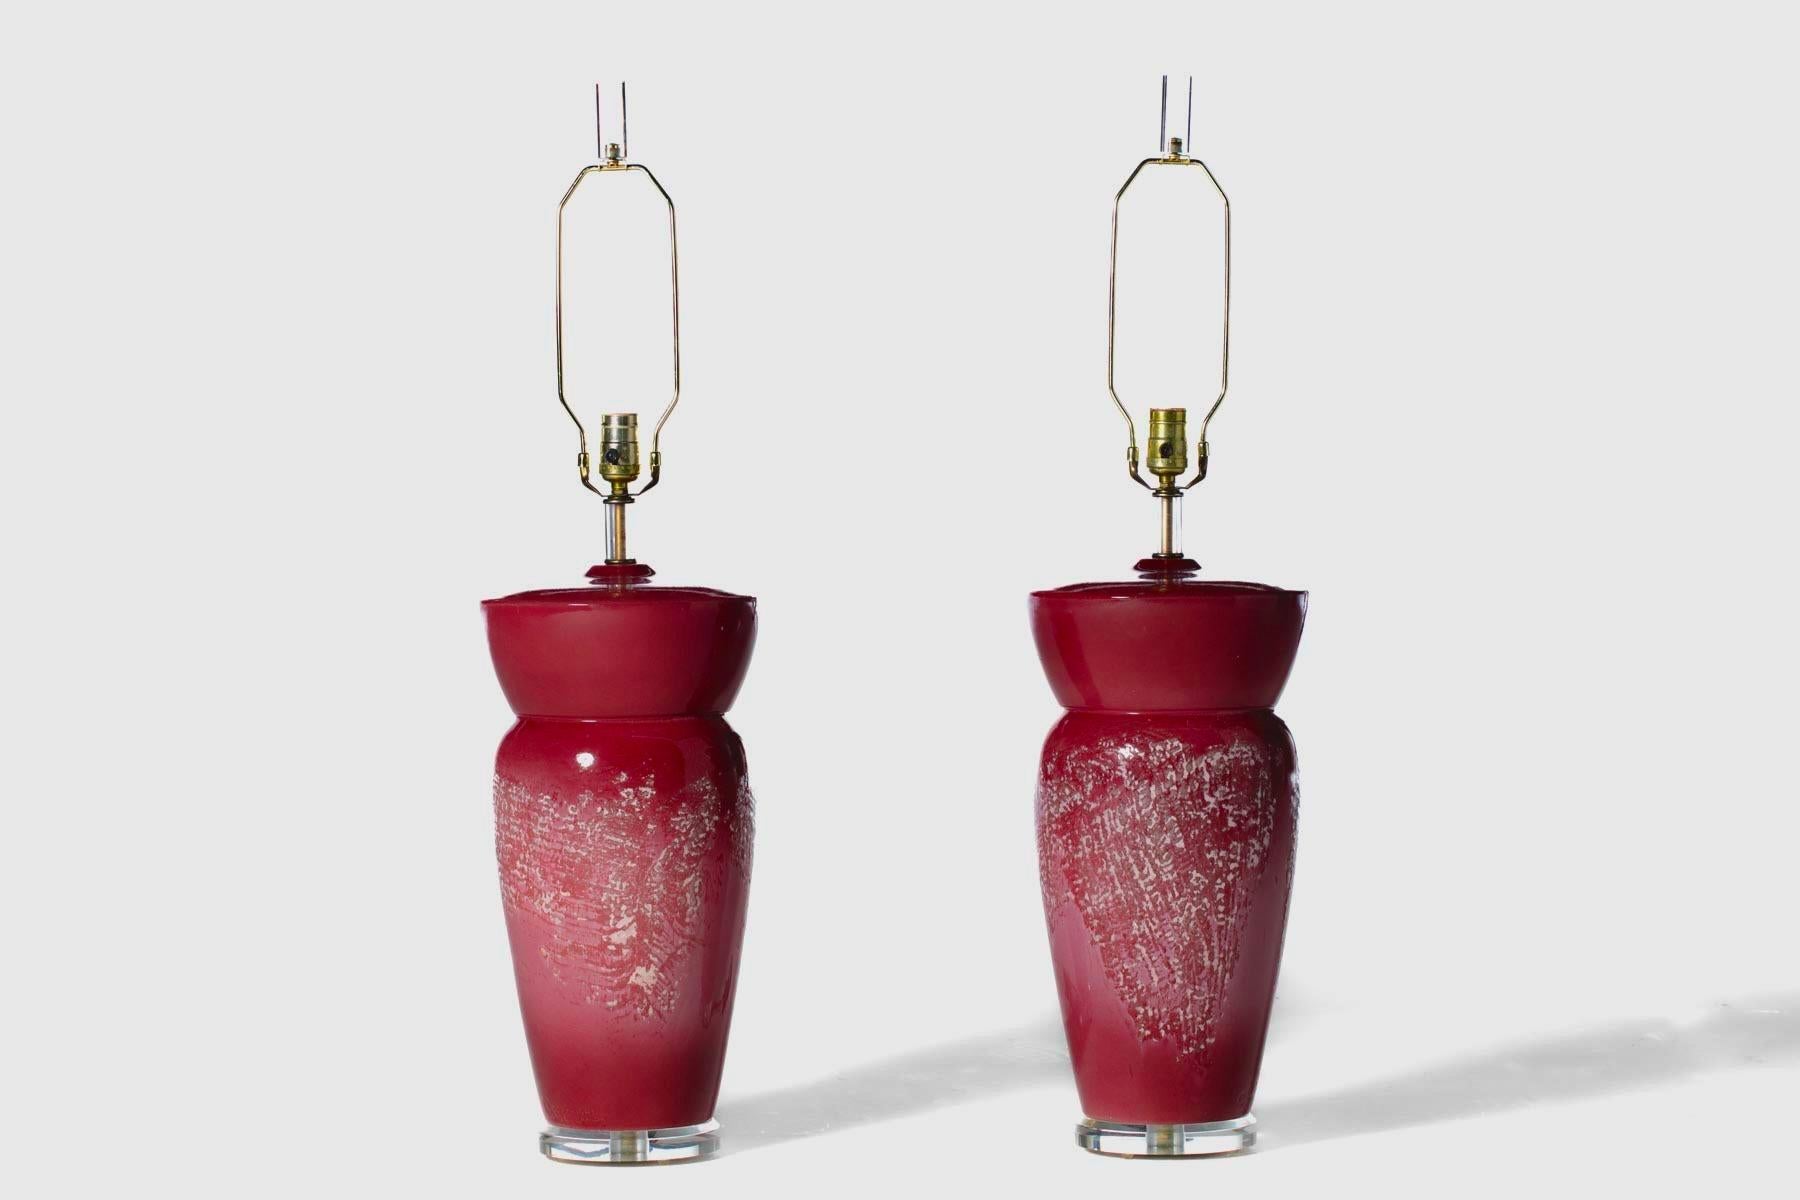 Monumentales lampes post-modernes en céramique rose framboise Sorbet de Sunset vers 1980 en vente 8